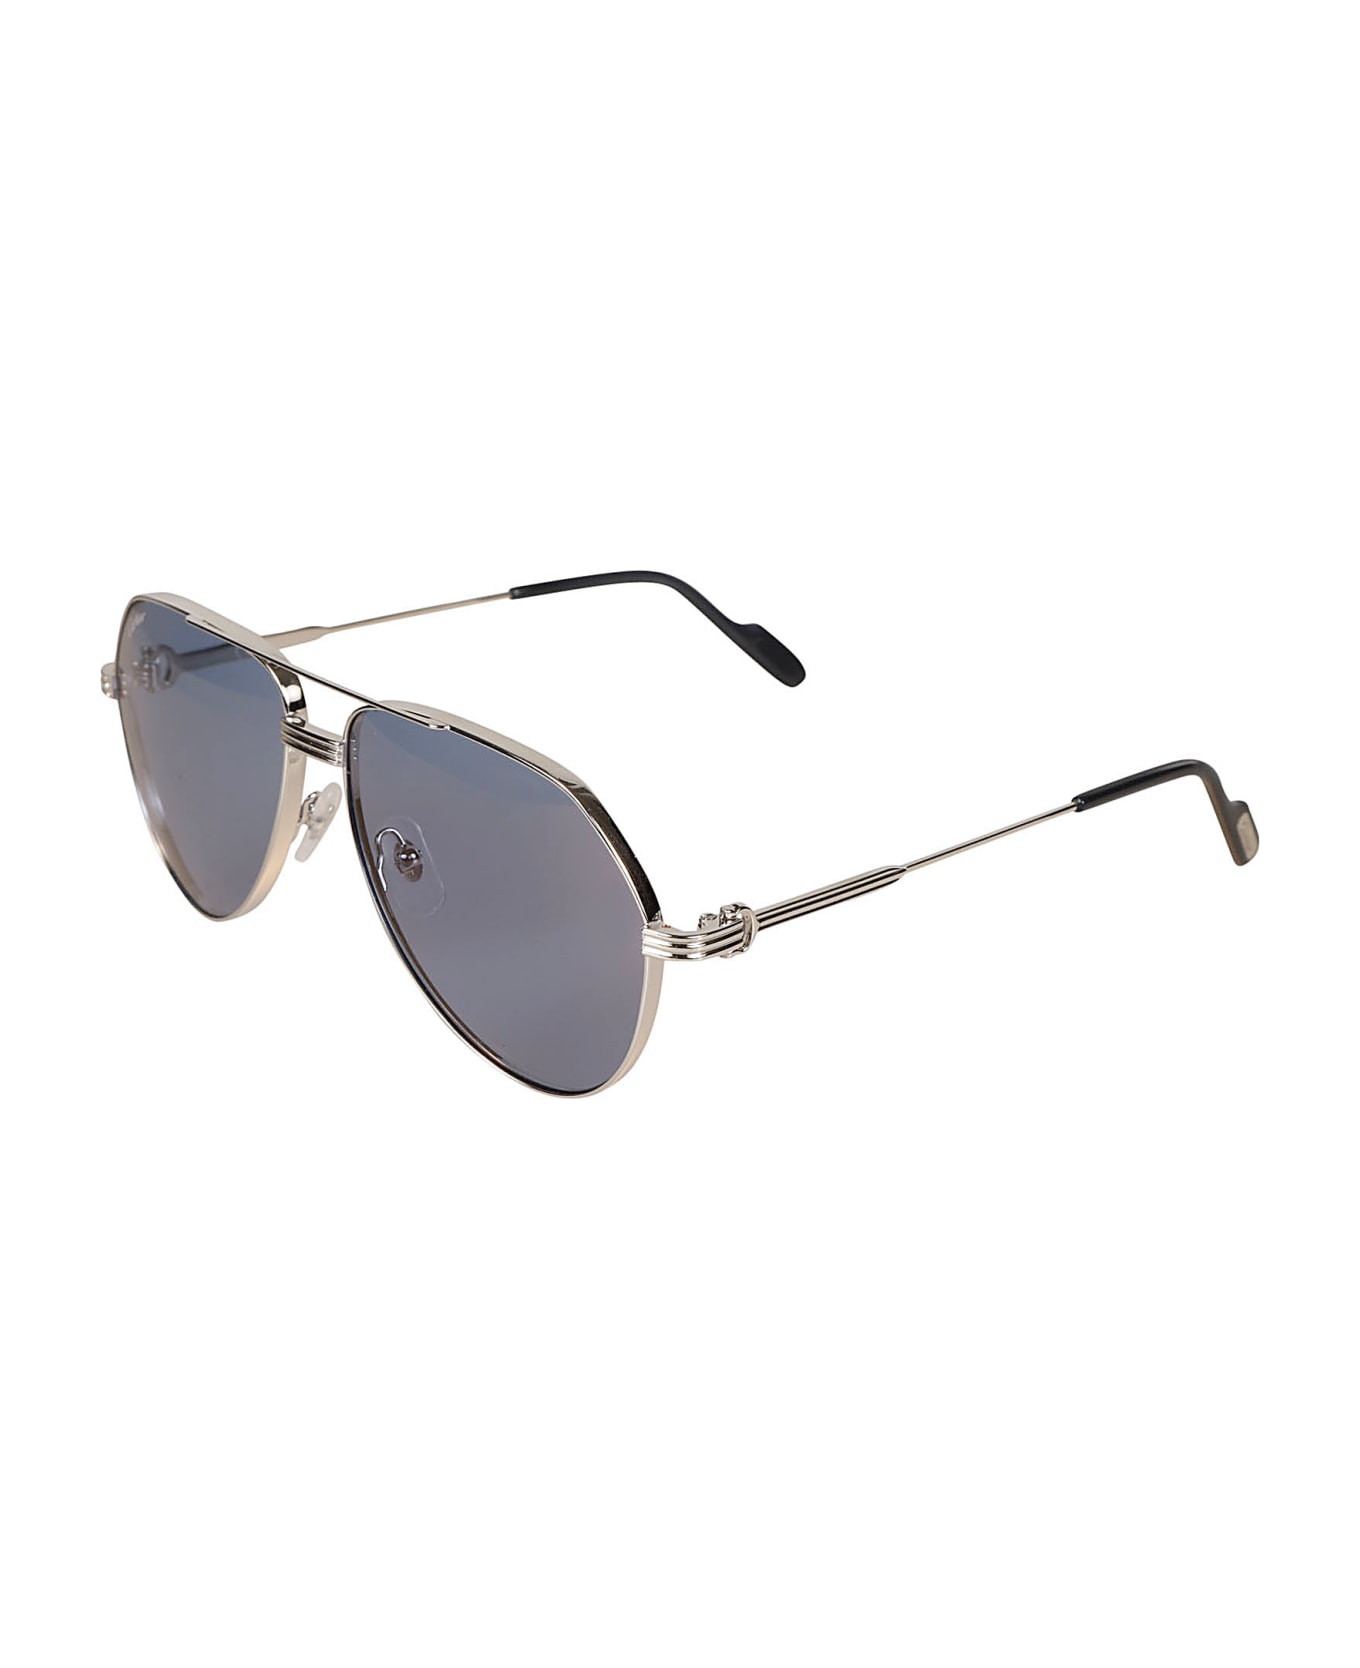 Cartier Eyewear Aviator Classic Sunglasses Sunglasses - silver